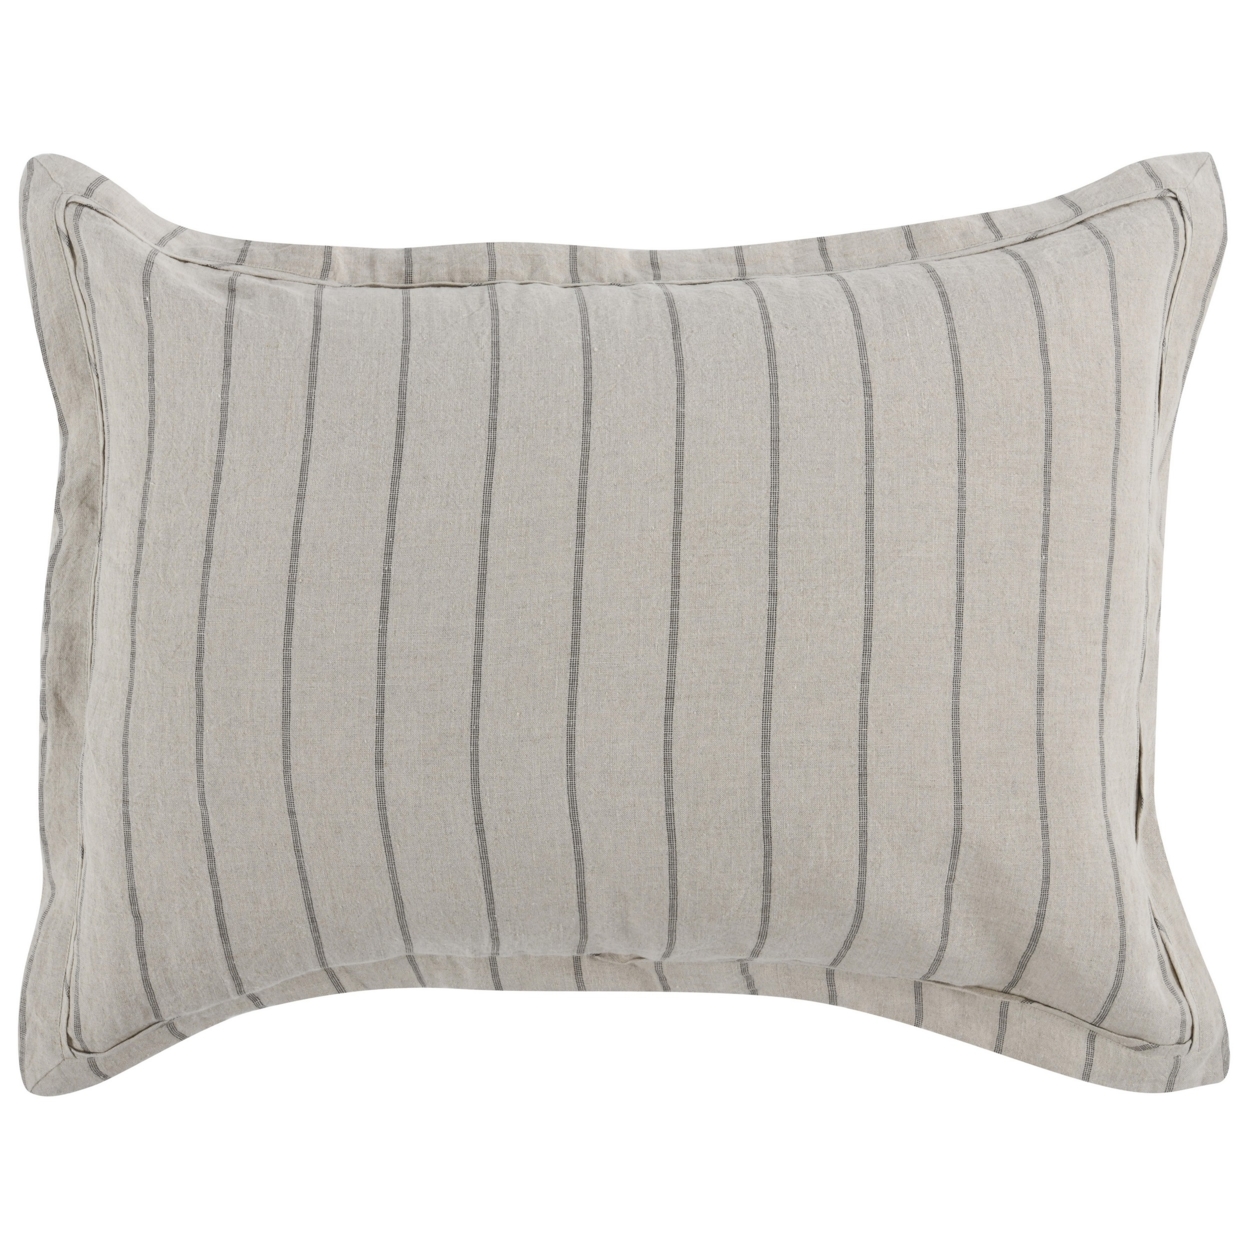 Tara 26 Inch Linen Standard Pillow Sham, Stone Washed, Stripe Design, Beige- Saltoro Sherpi